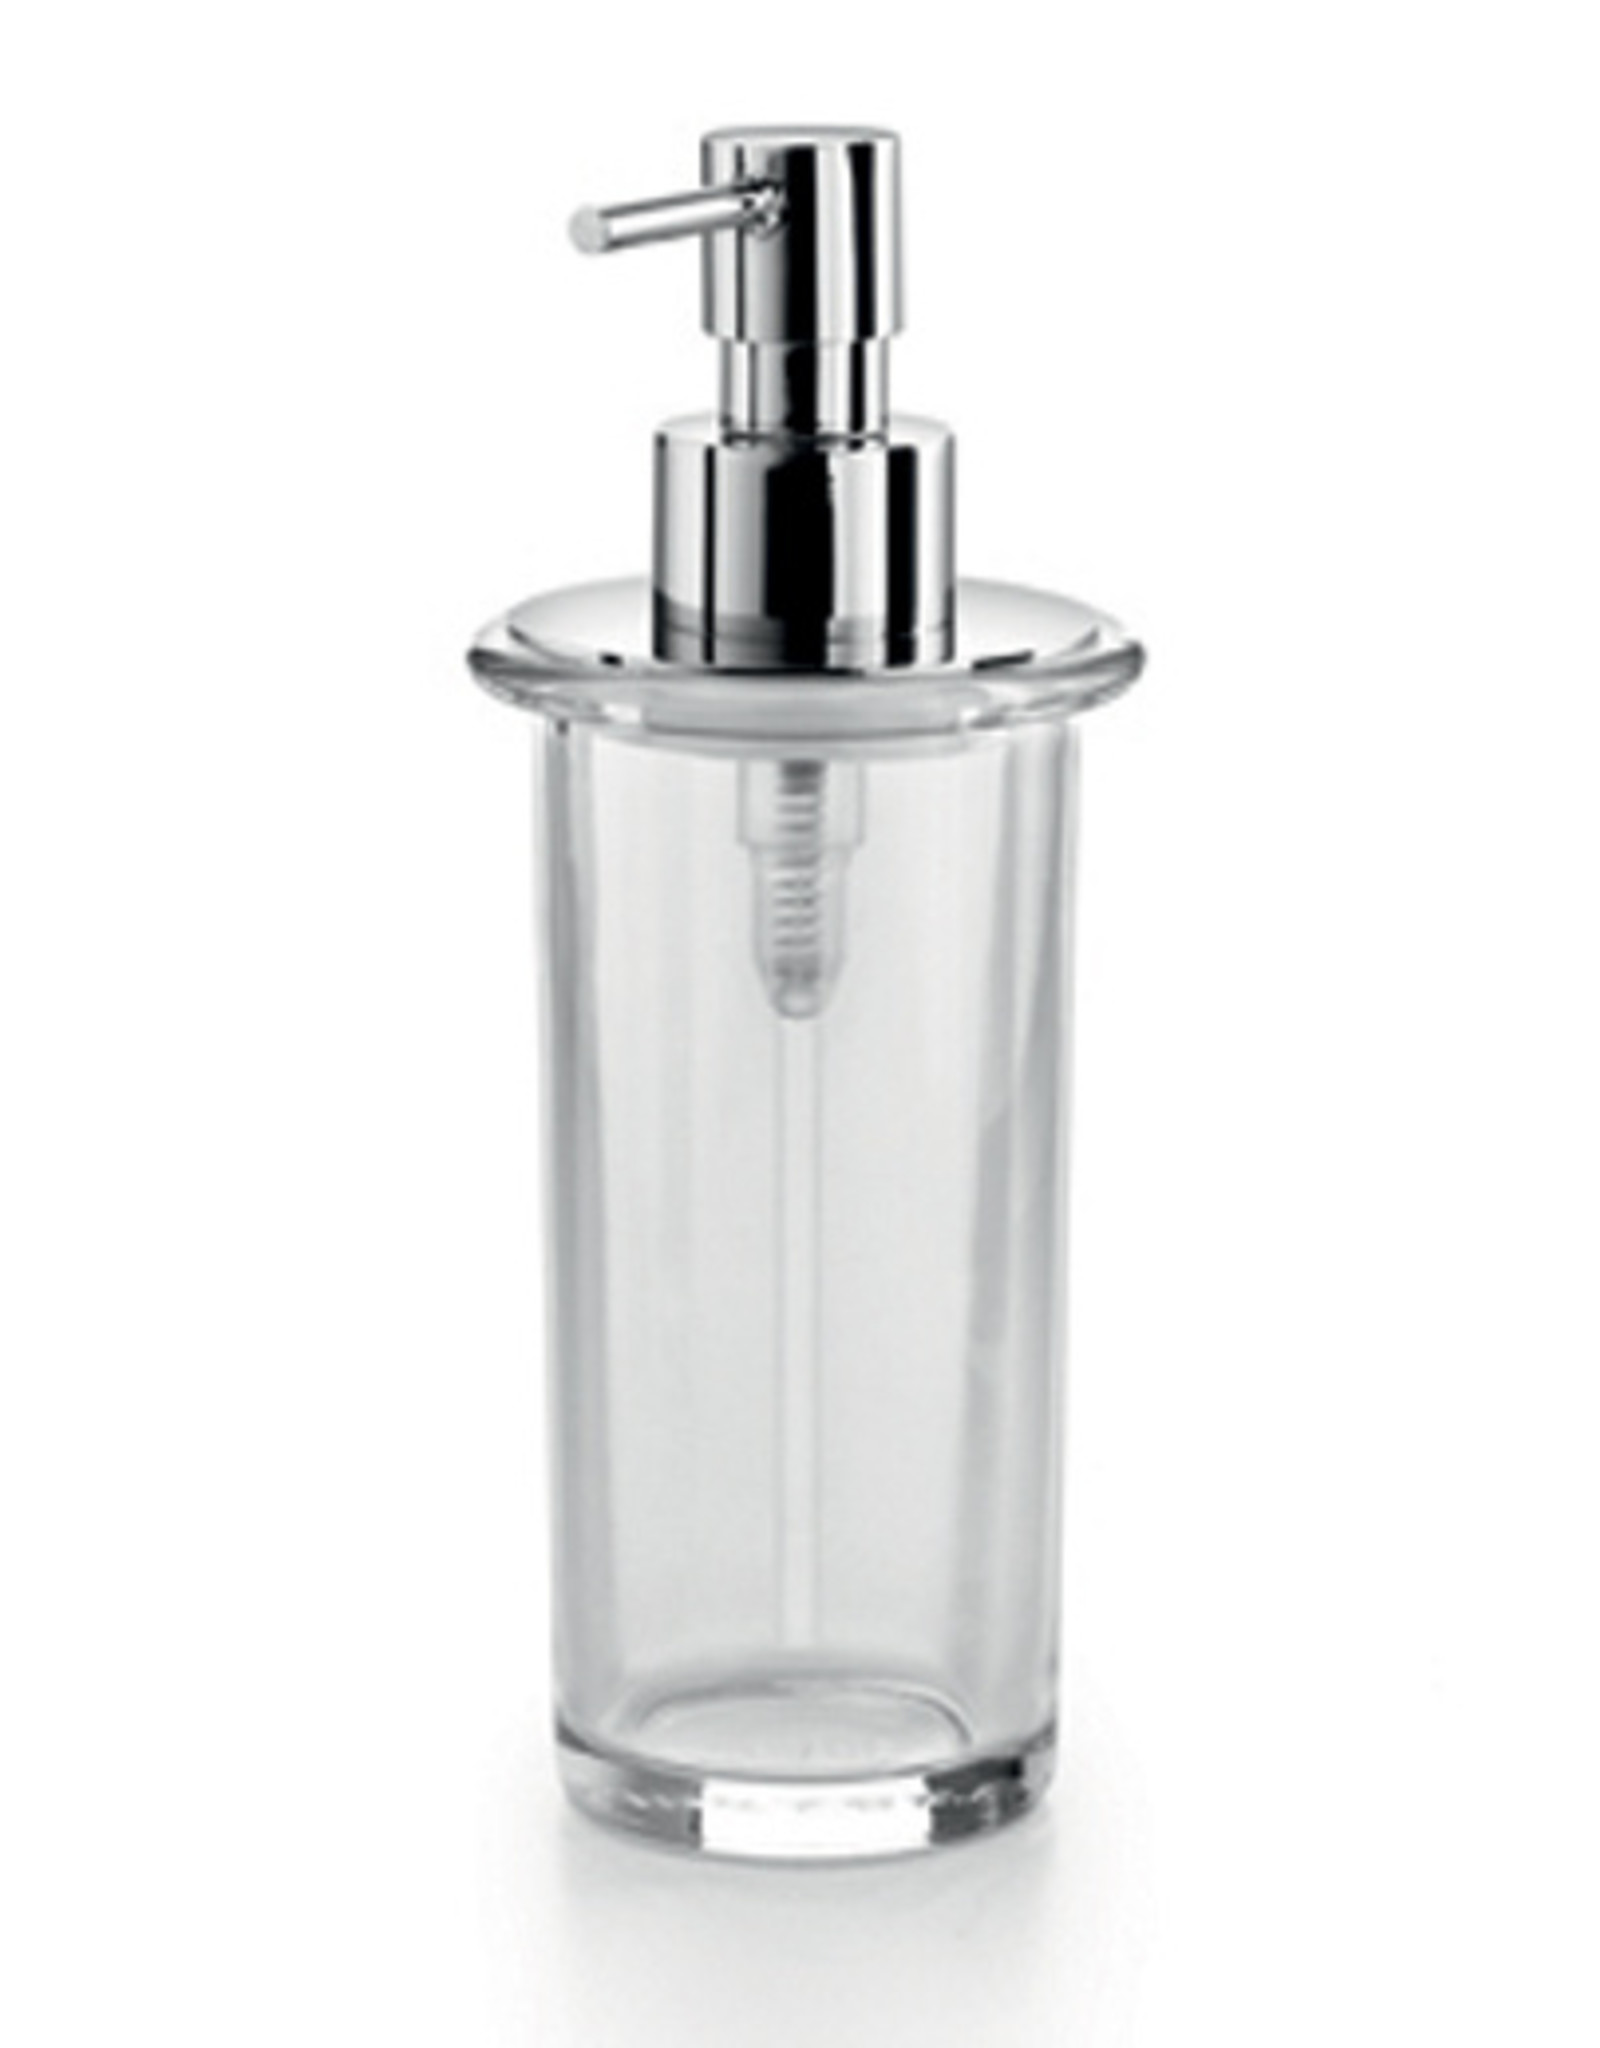 liquid soap dispenser, transparent glass